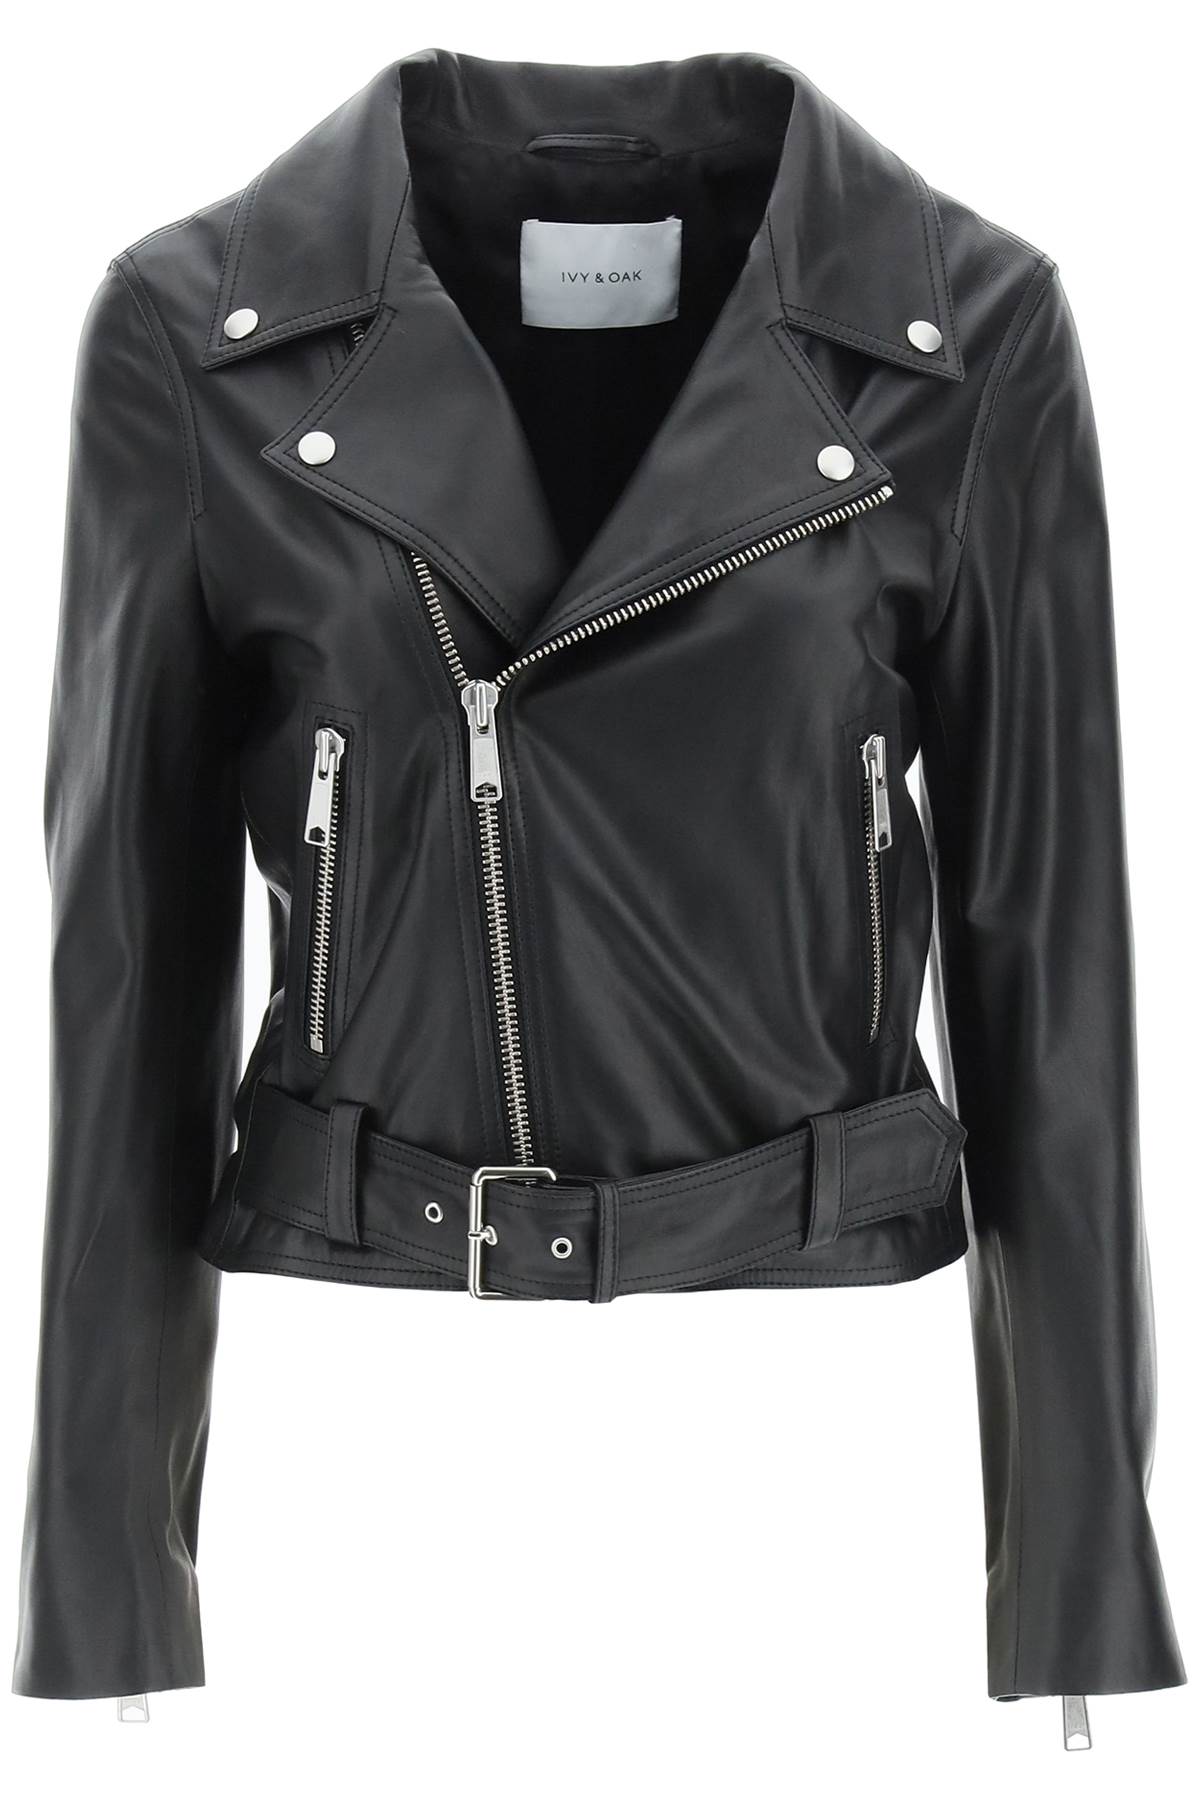 Ivy Oak Short Leather Biker Jacket